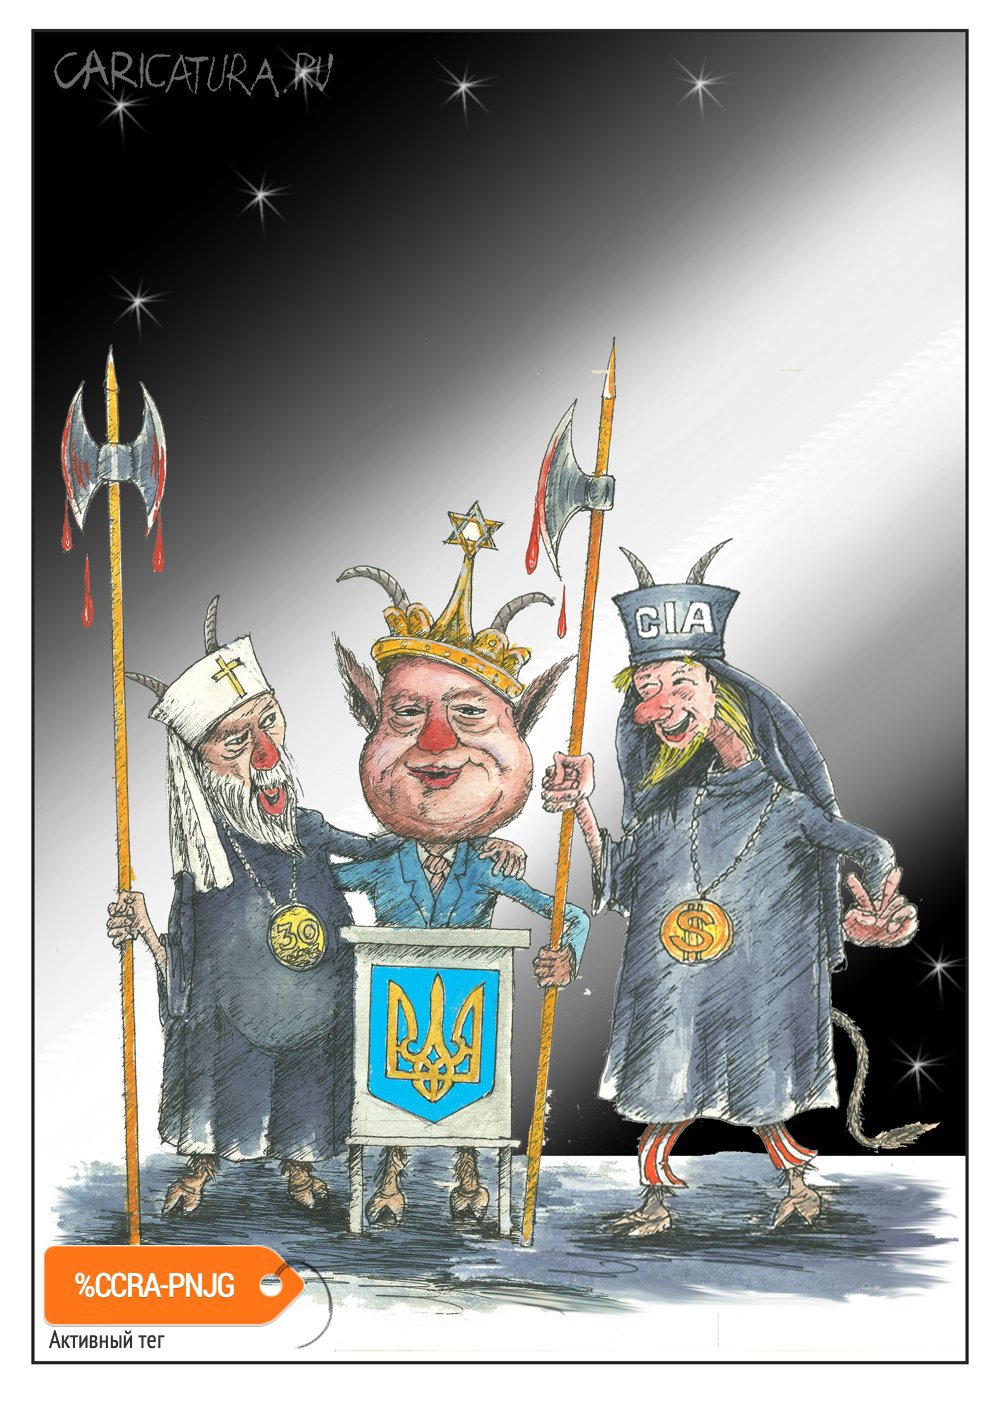 Карикатура "Бесы", Николай Свириденко